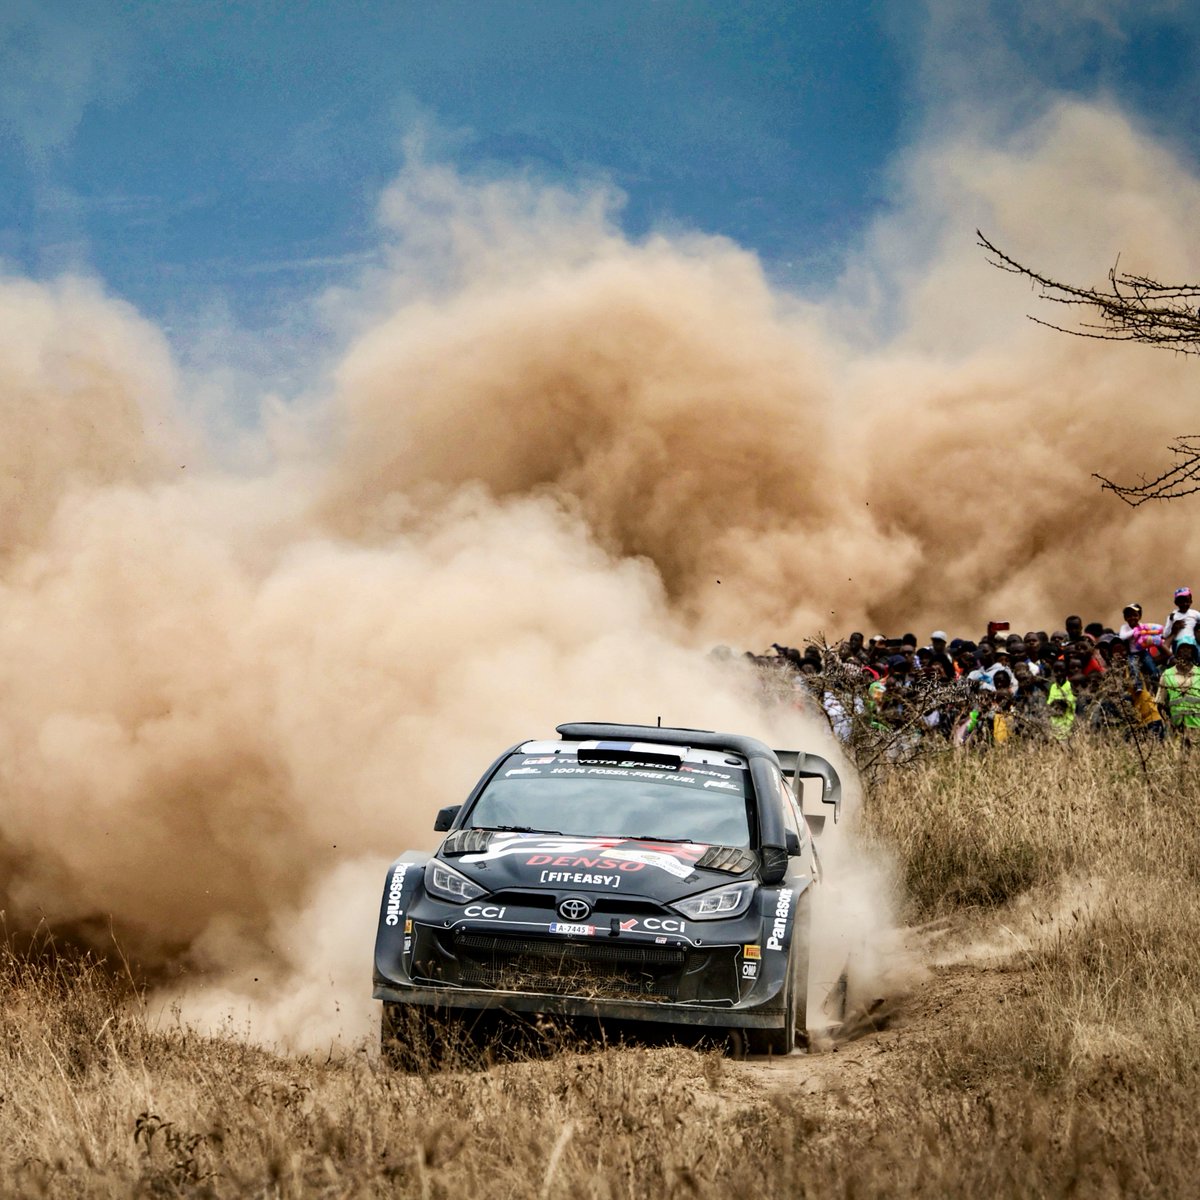 SAFARI RALLY WINNERS AGAIN! 🏆 Phenomenal performance by @KalleRovanpera and @JonneHalttunen to secure the fourth Kenya win in succession for our team 🙌 #ToyotaGAZOORacing #GRYaris #WRC #SafariRallyKenya 🇰🇪